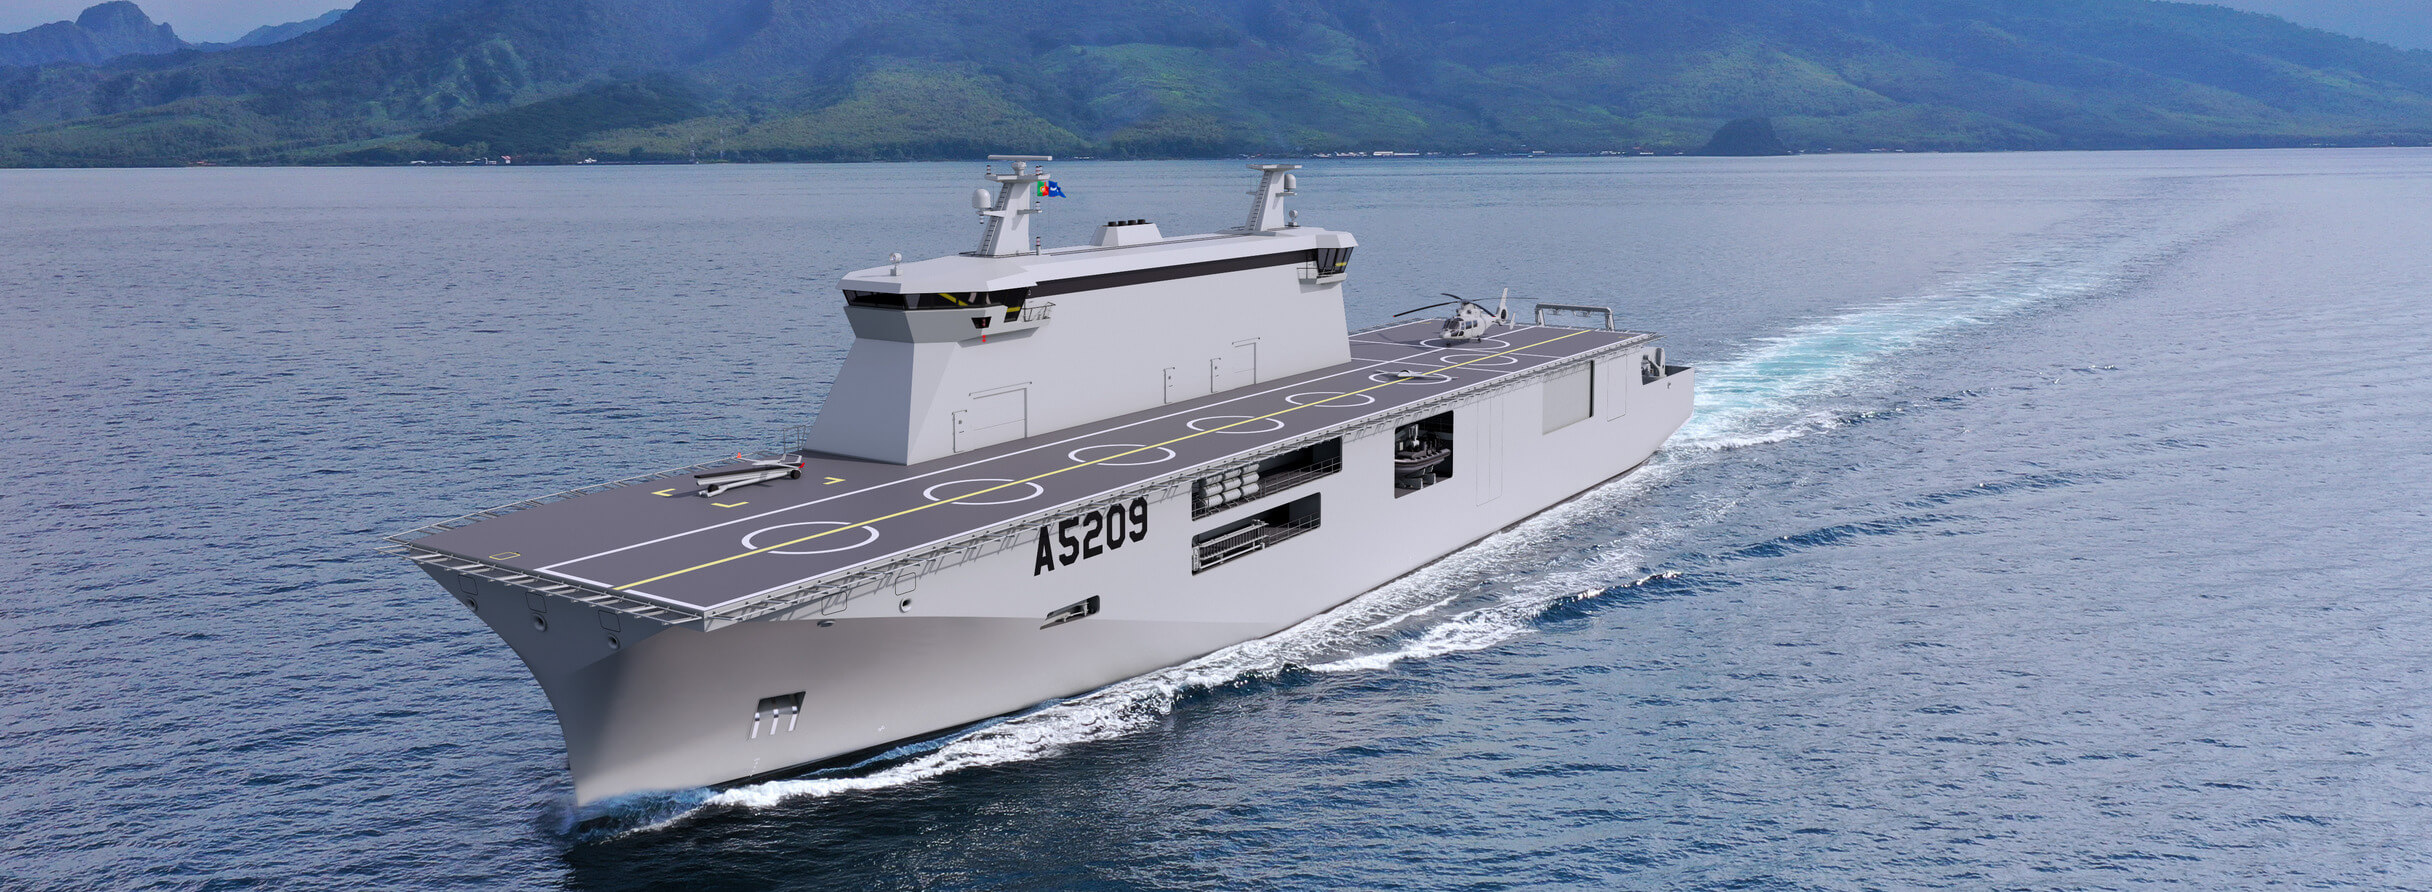 signs Damen Portuguese for Navy Vessel Damen Shipyards contract with innovative Multi-Purpose -